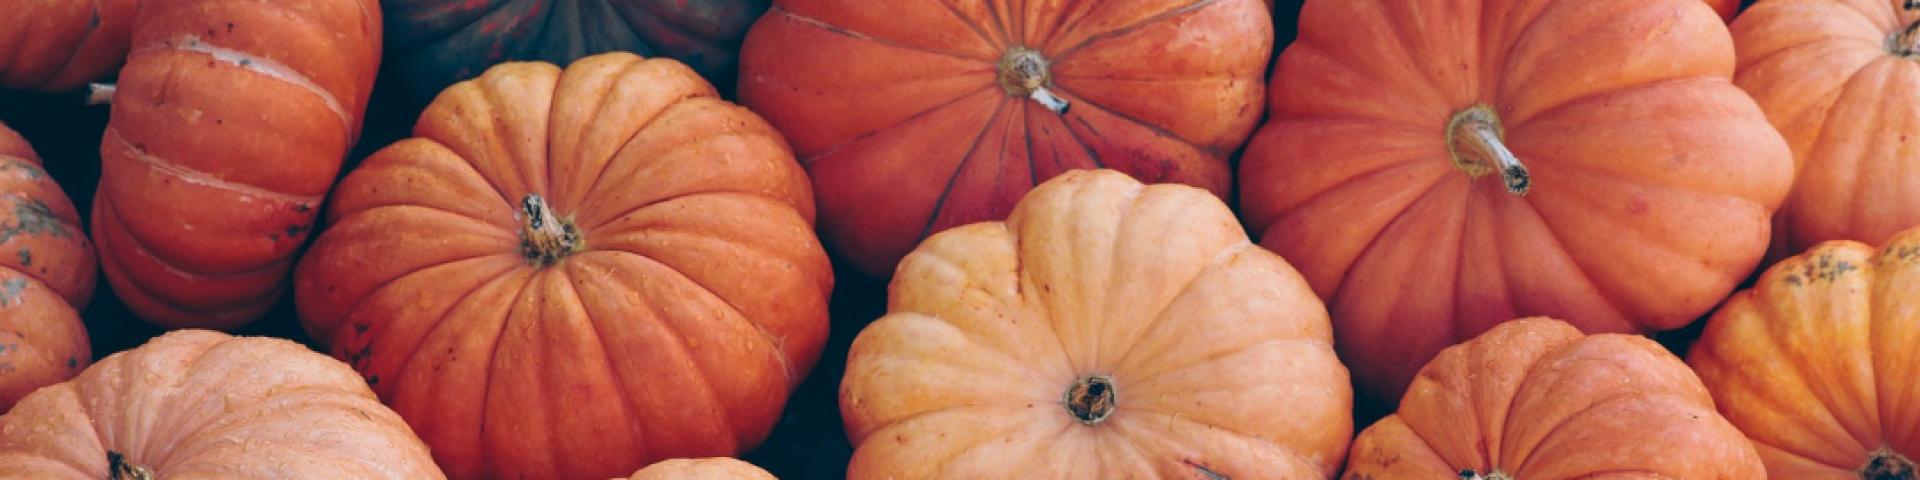 pumpkin-7496159_1920 Jens via Pixabay